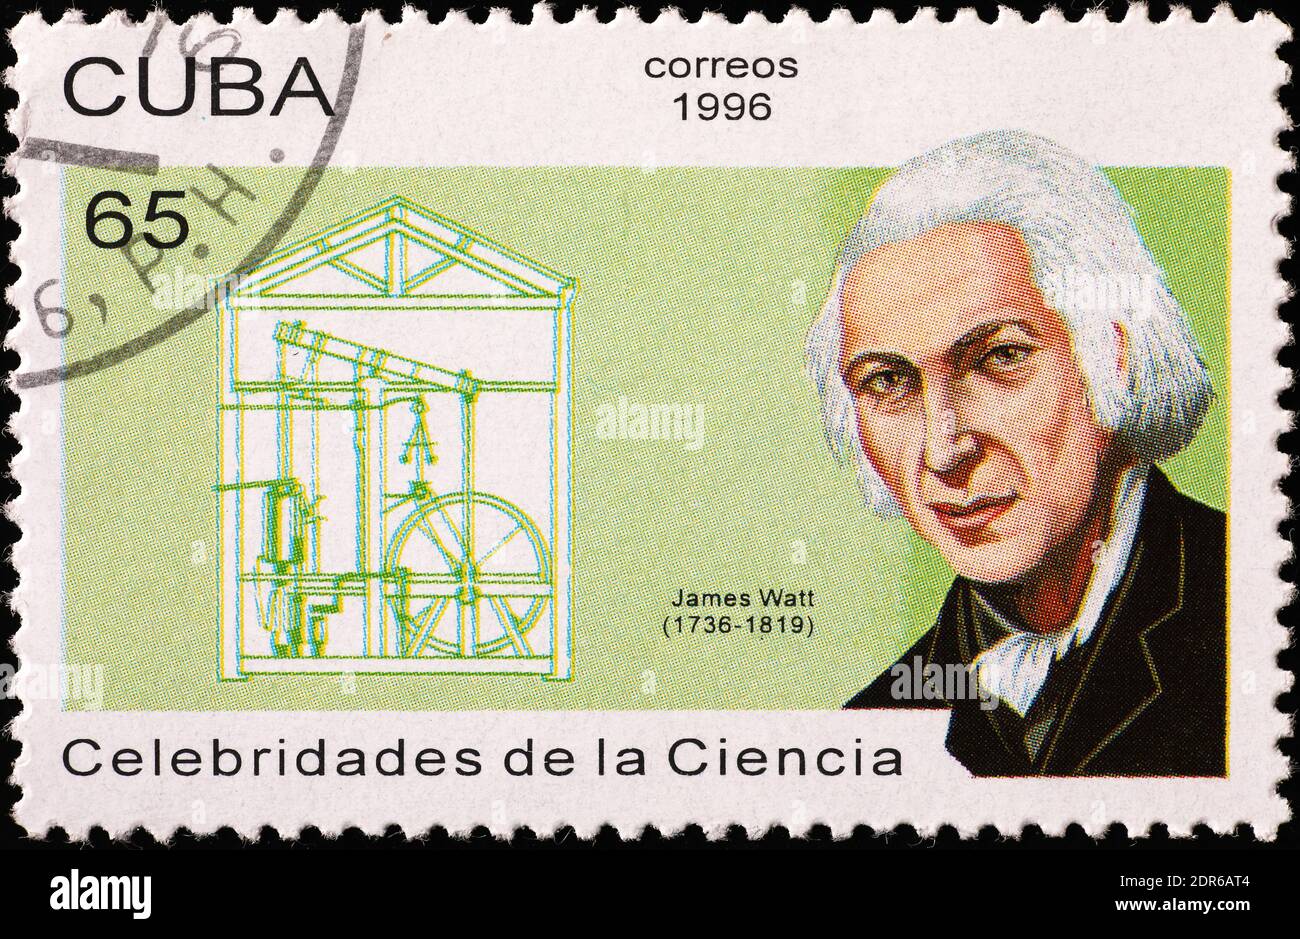 James Watt auf kubanischer Briefmarke Stockfoto